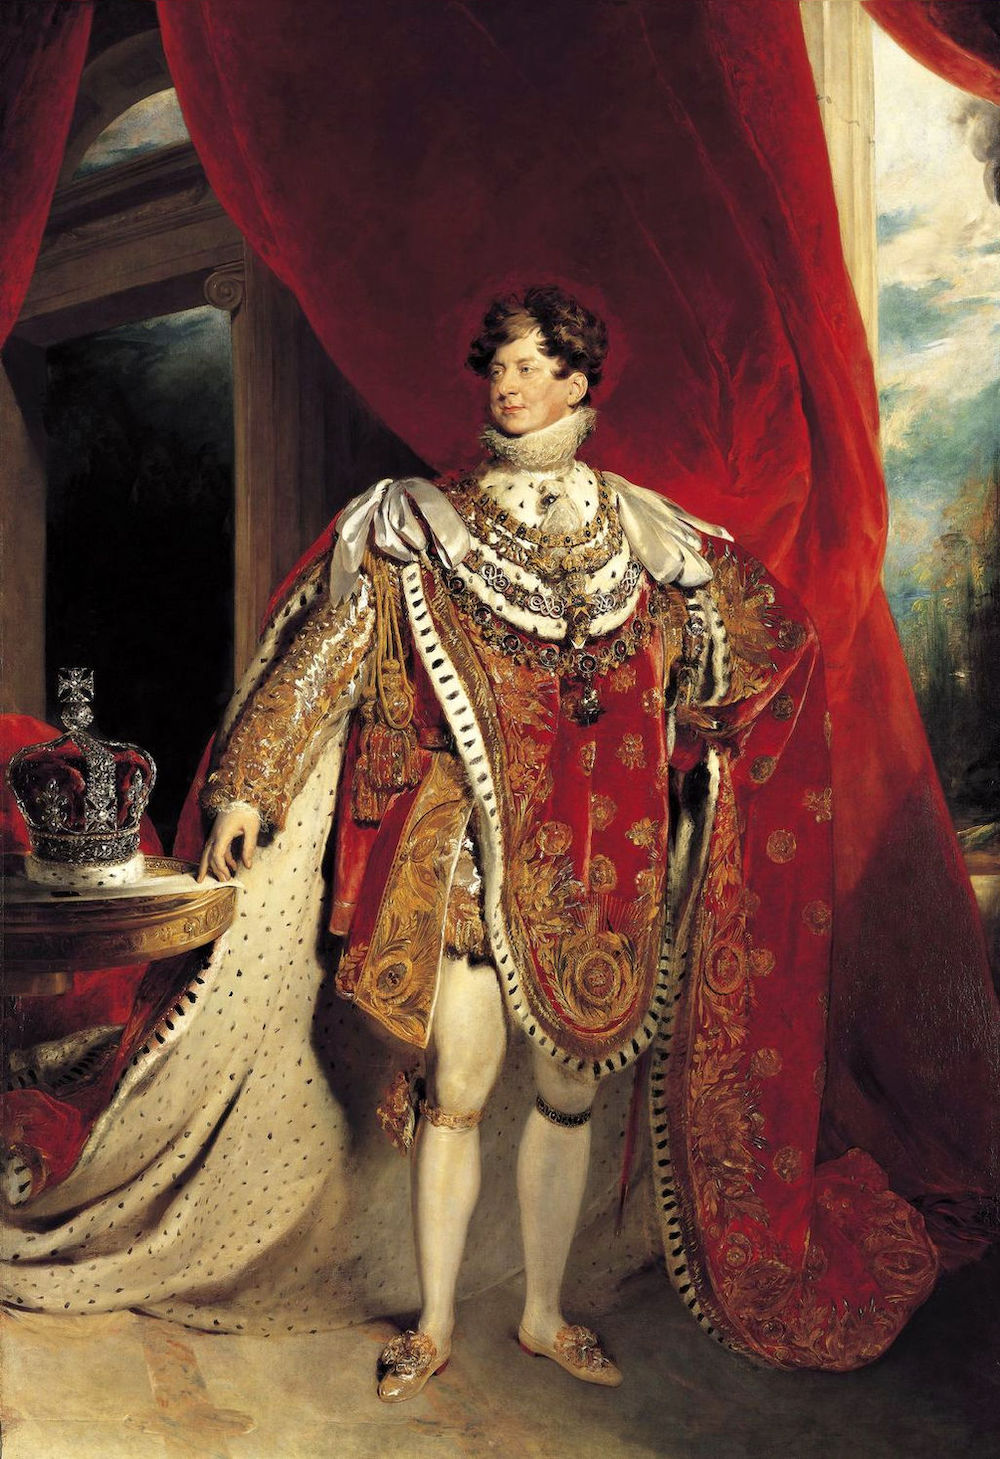 British Monarchs: King George IV coronation portrait by Thomas Lawrence, 1821. Photo Credit: © Public Domain via Wikimedia Commons.